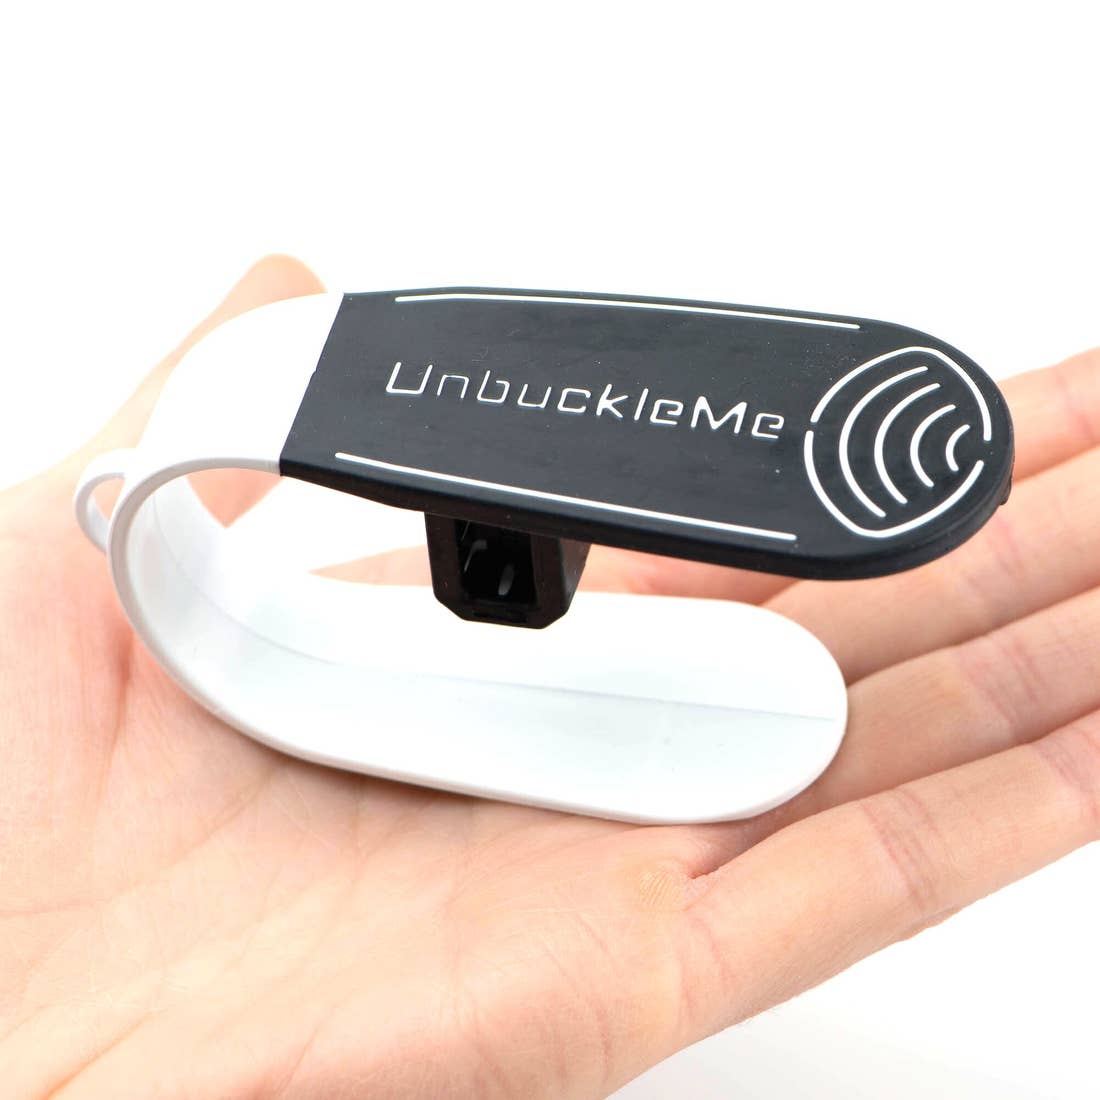 UnbuckleMe Car Seat Buckle Release Tool – UnbuckleMe®